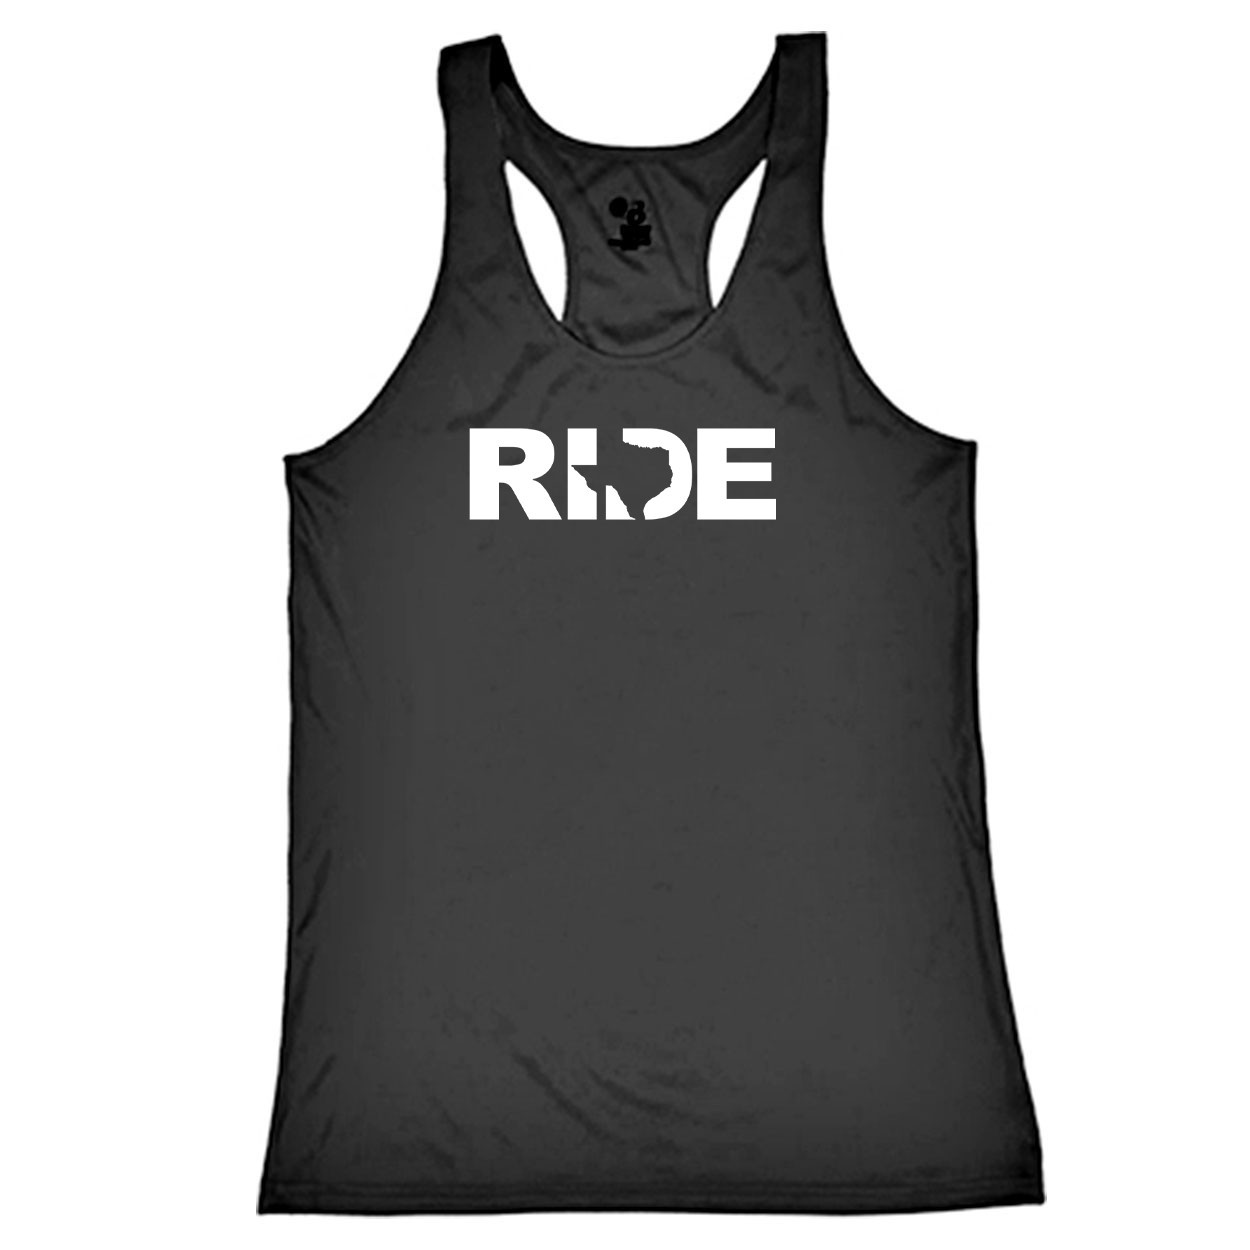 Ride Texas Classic Youth Girls Performance Racerback Tank Top Black (White Logo)